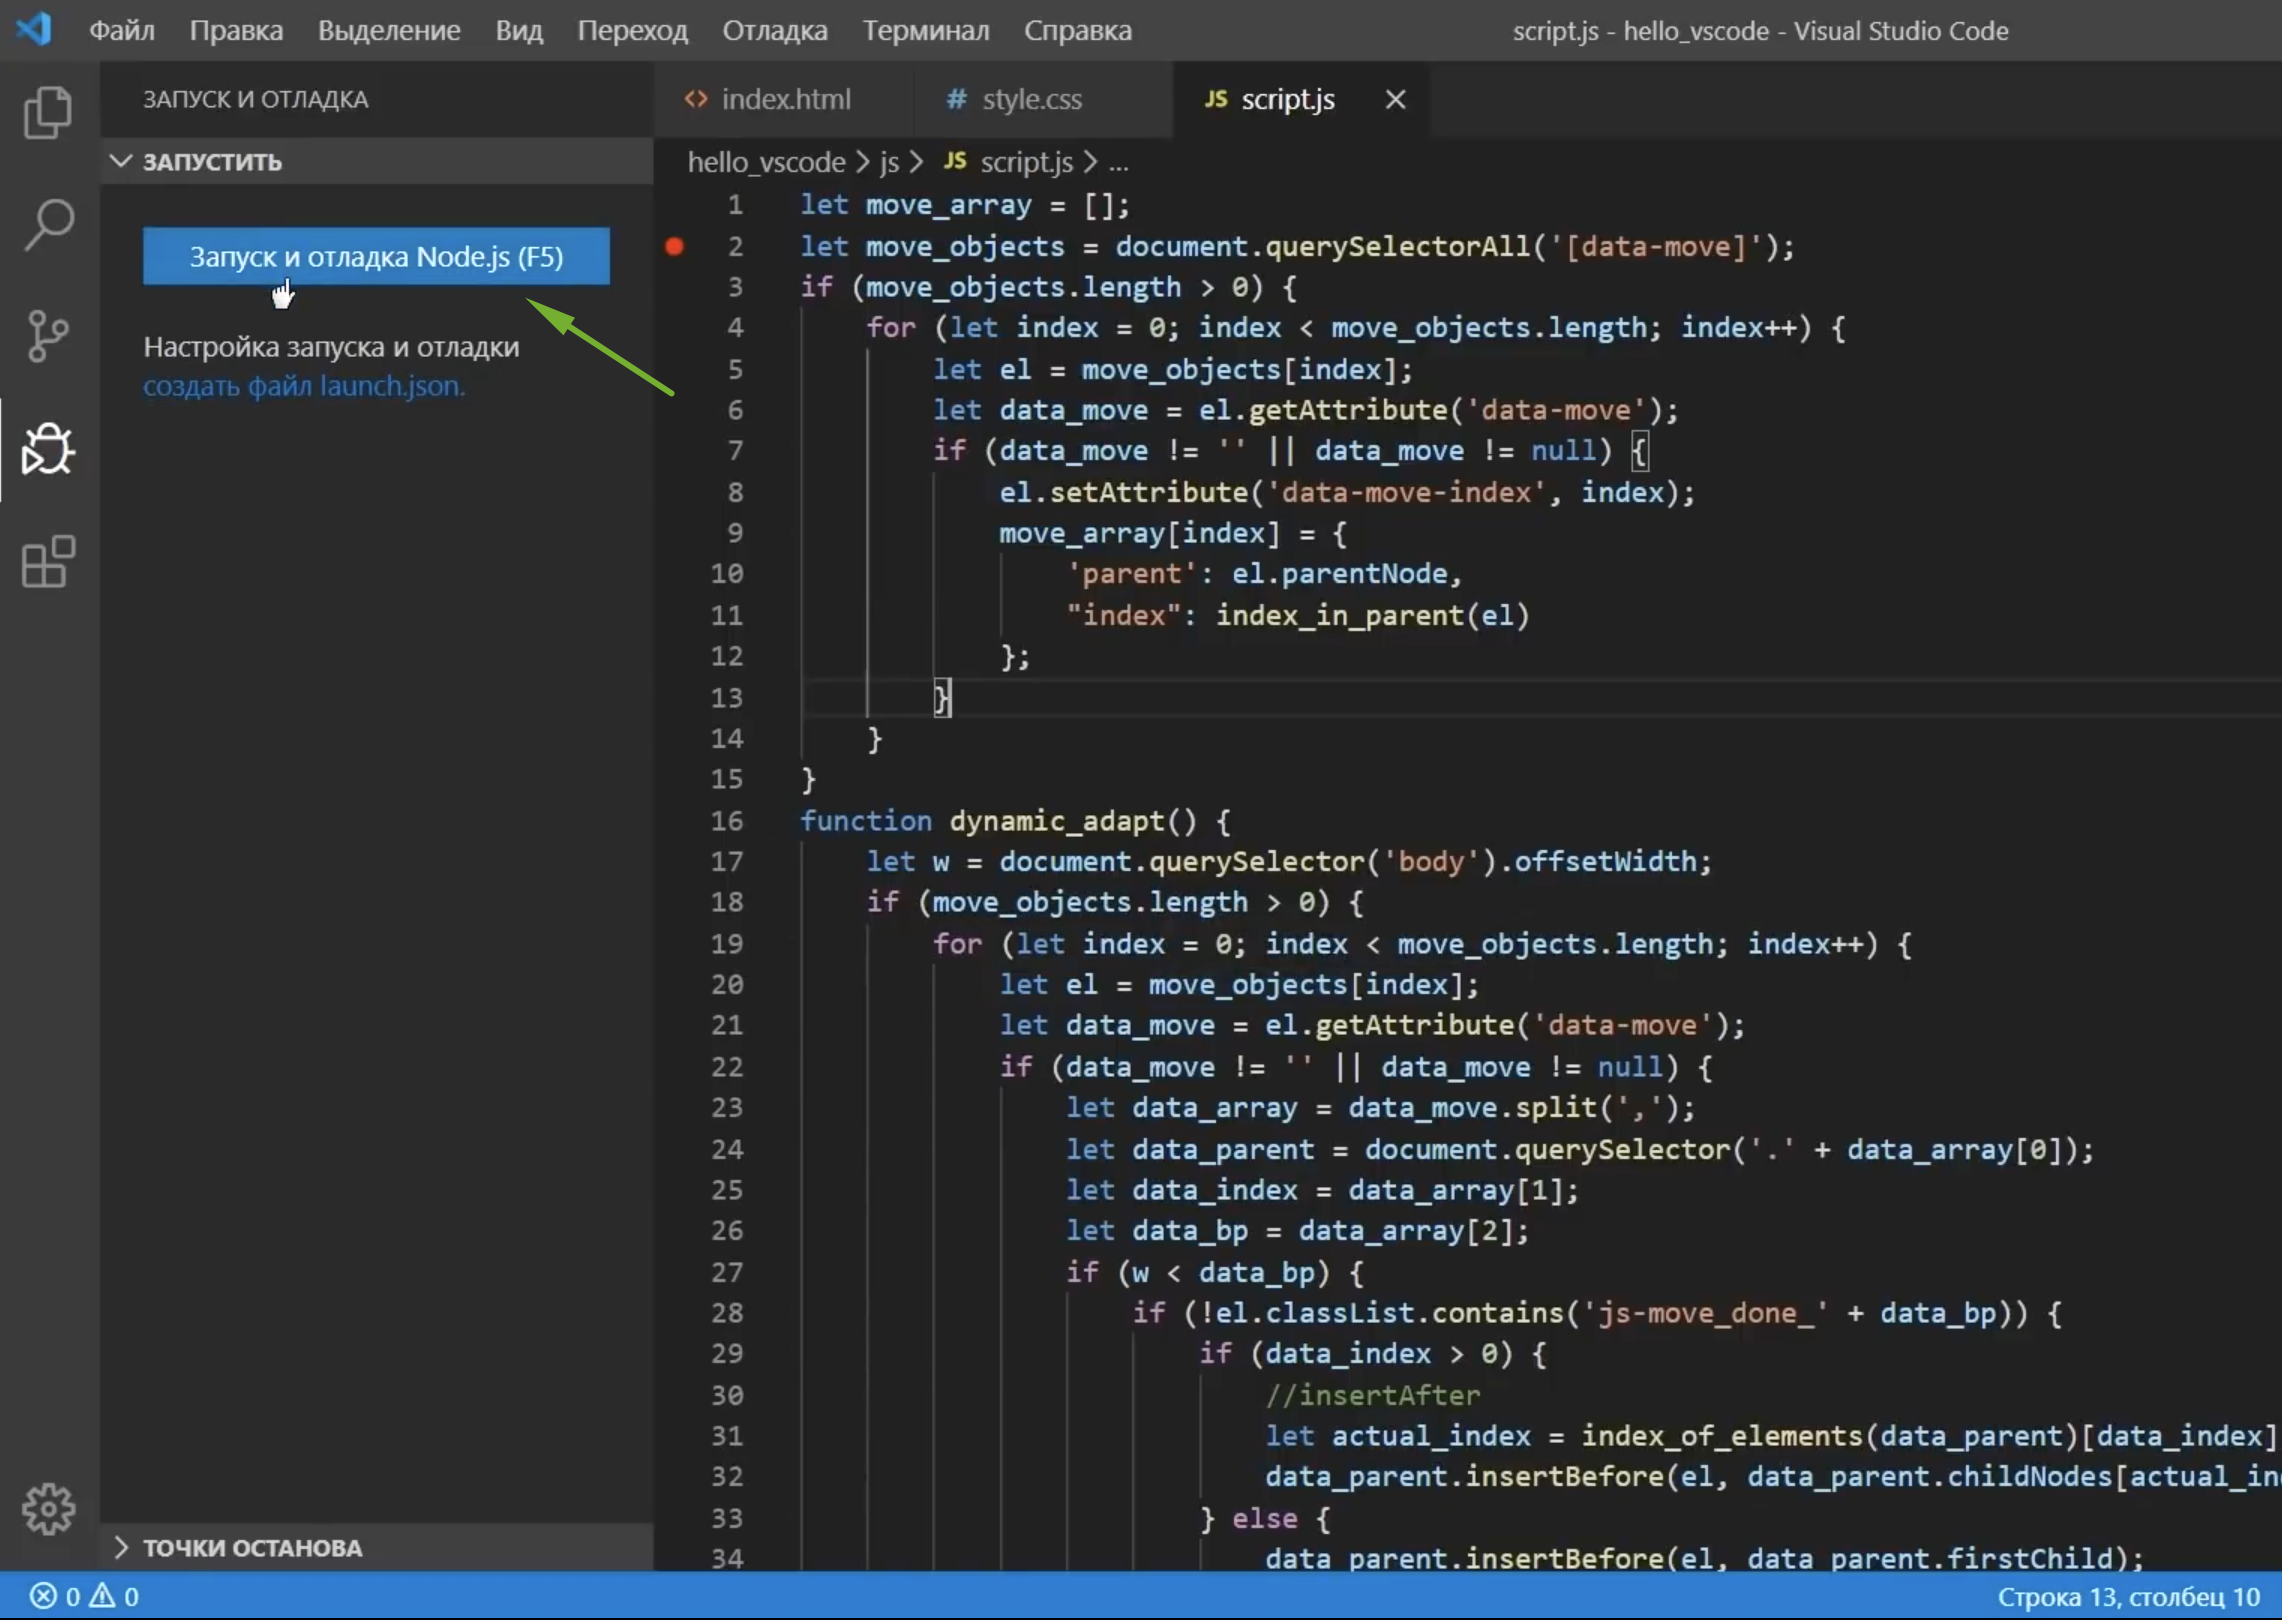 Game code win. Коды для Visual Studio code. Visual Studio code основа программирования. Visual Studio code приложение. Редактор кода Visual Studio code.